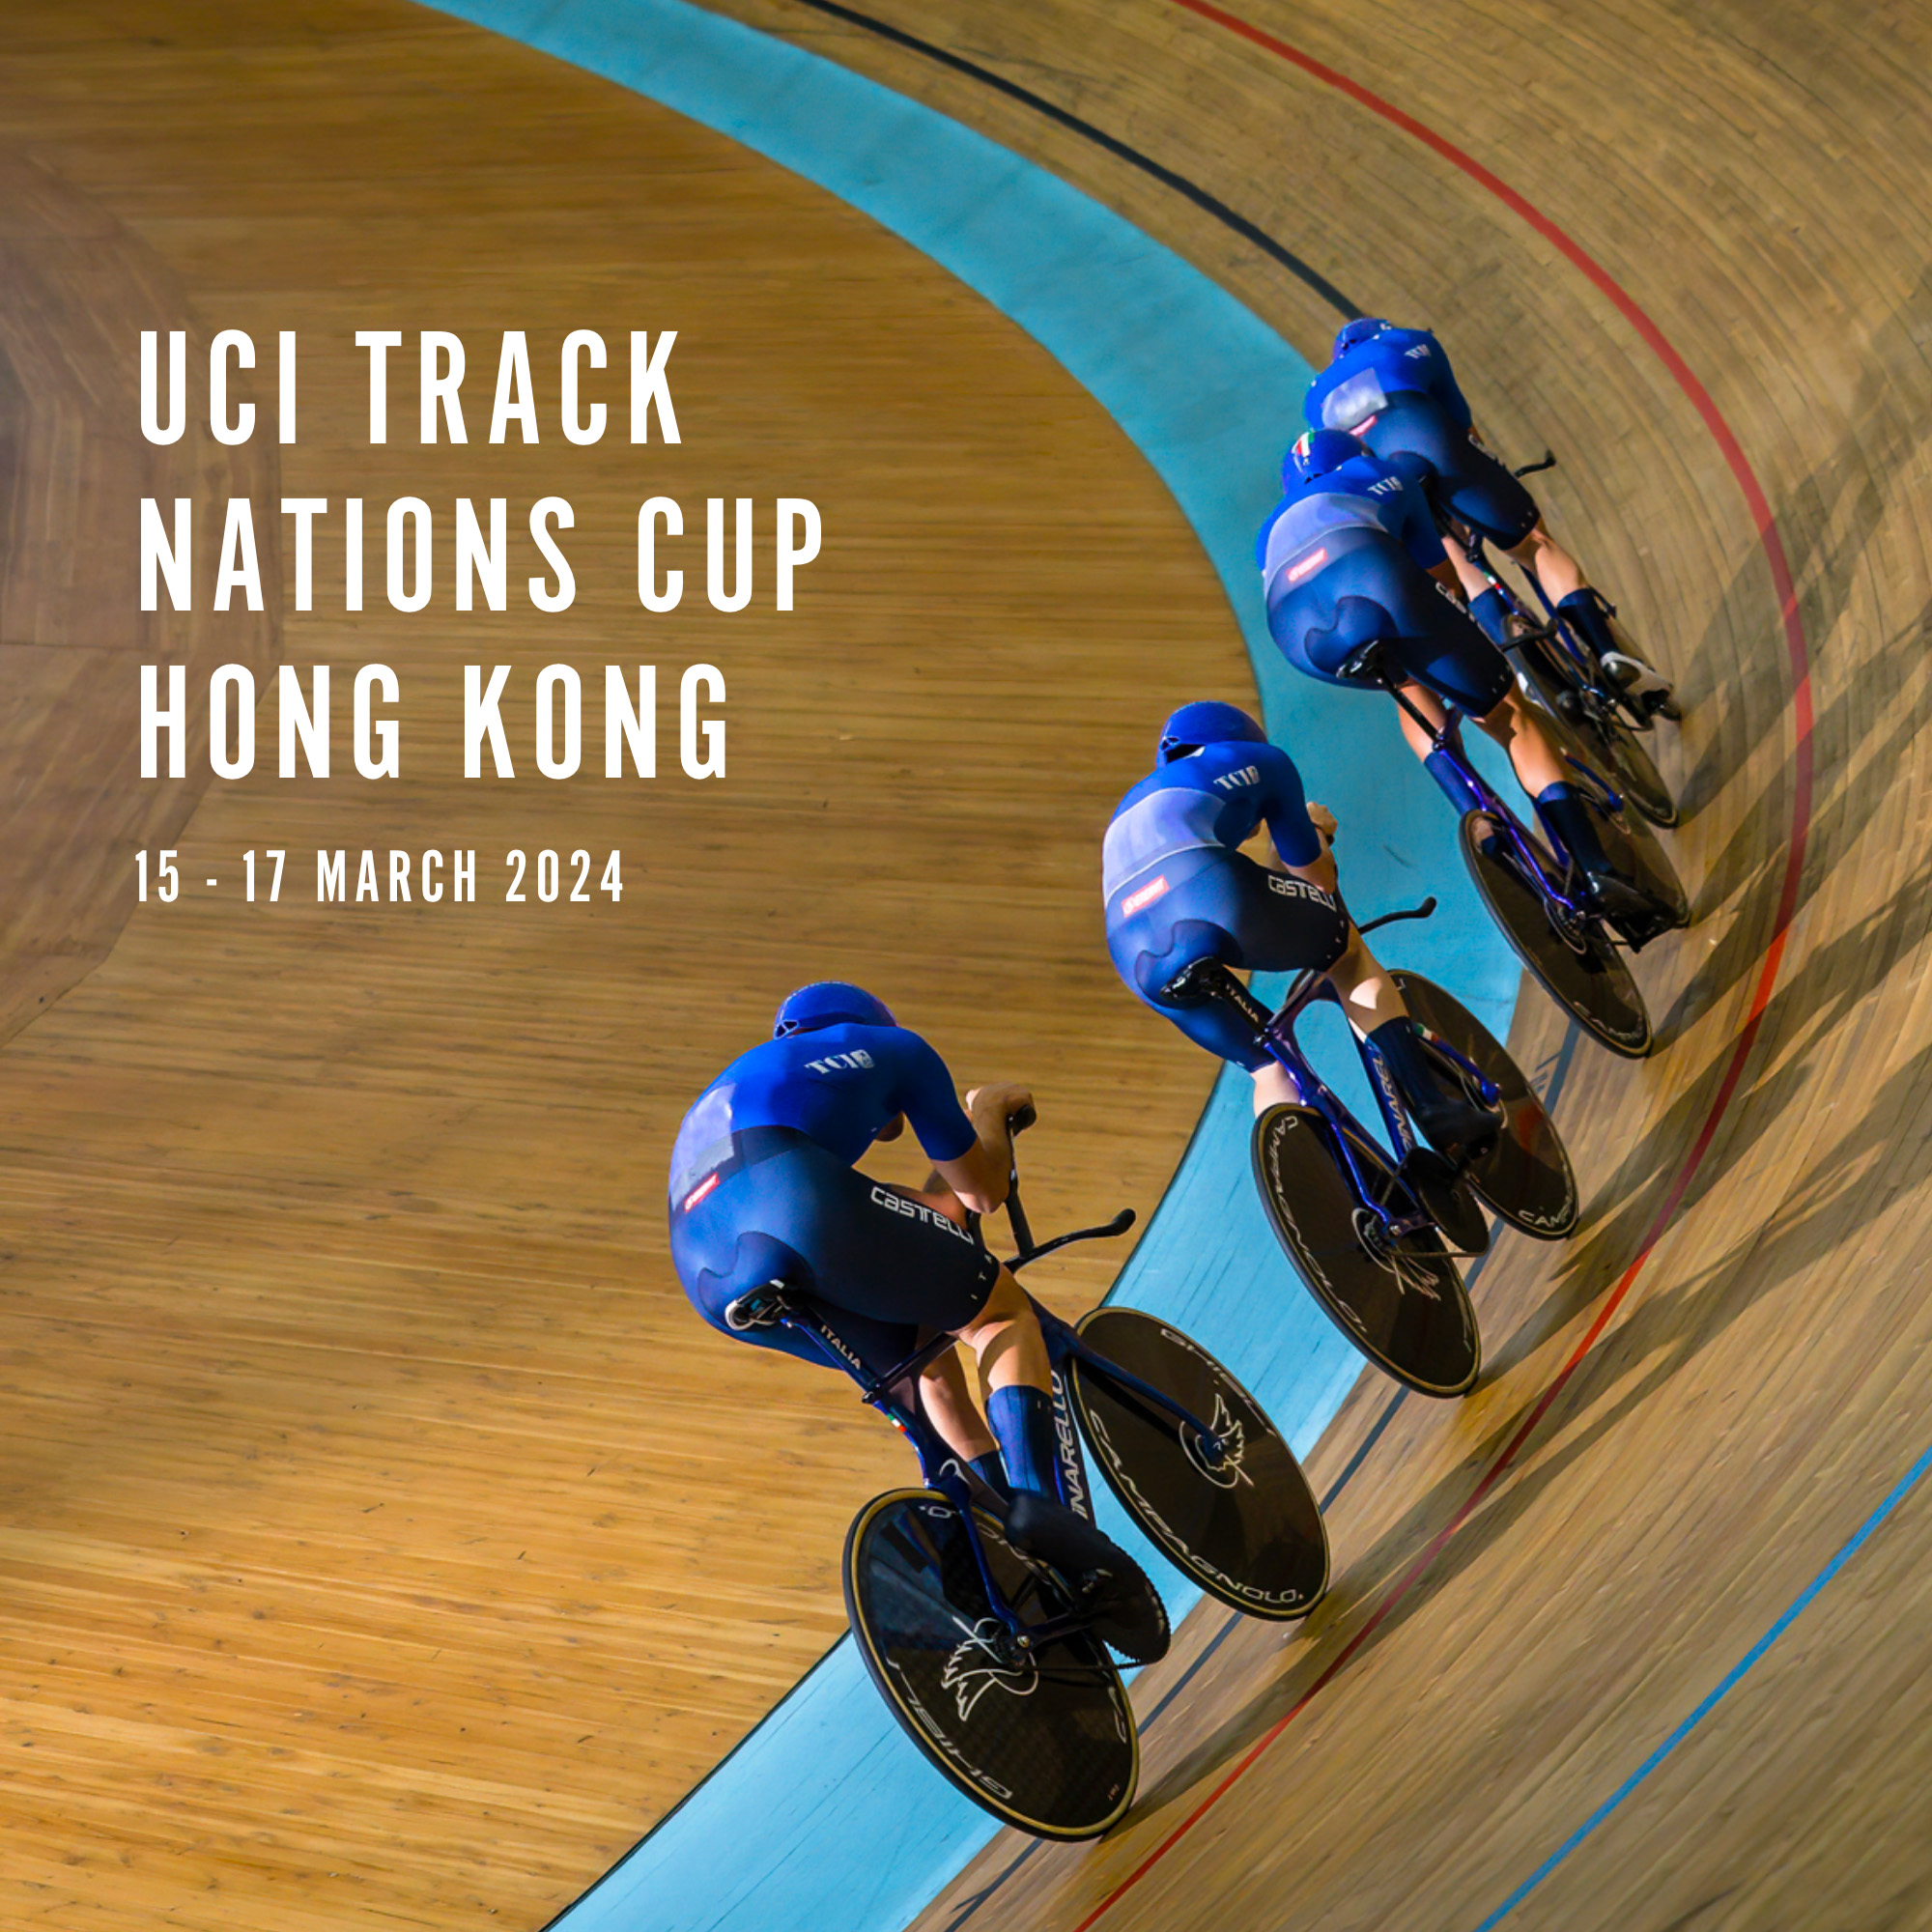 UCI TRACK NATIONS CUP - HONG KONG